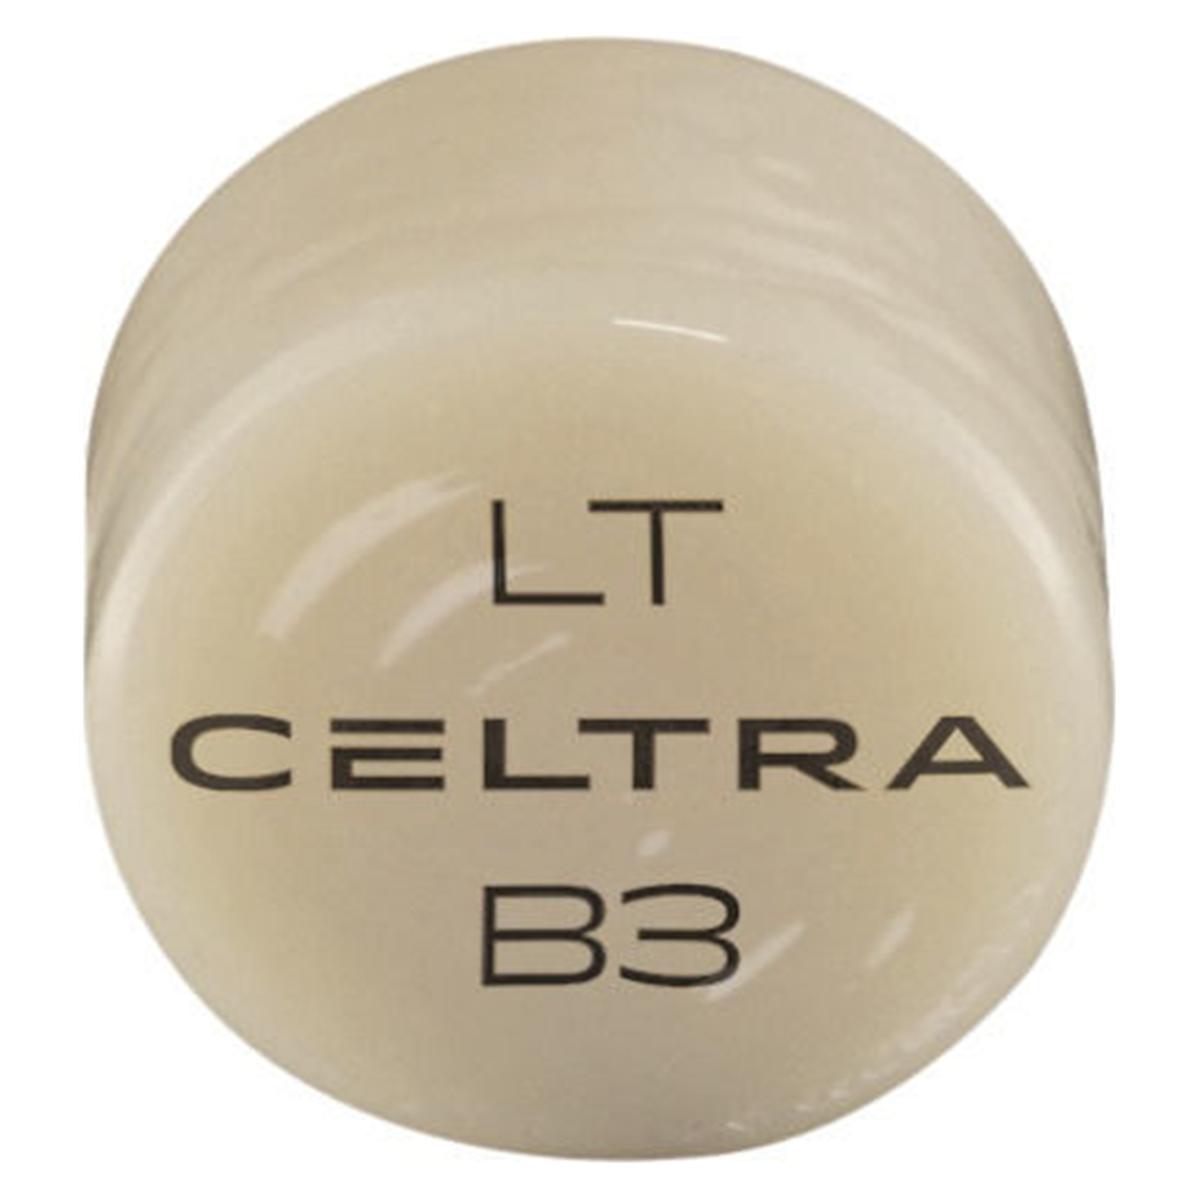 CELTRA® Press LT - B3, Packung 5 x 3 g